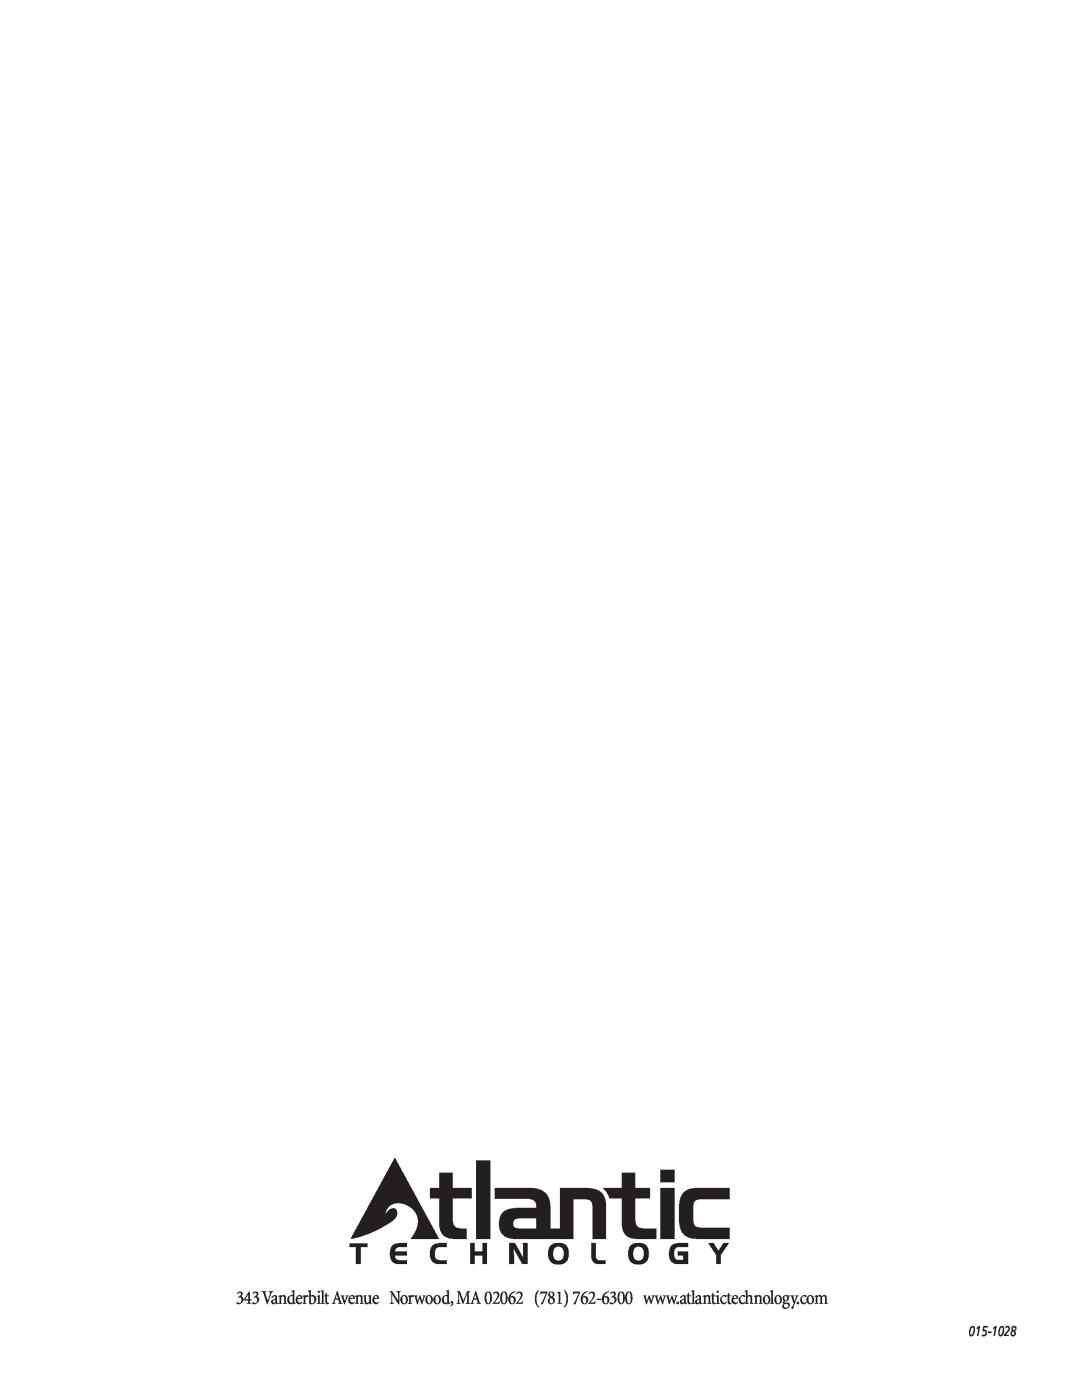 Atlantic Technology IWTS-28 SUB instruction manual 015-1028 